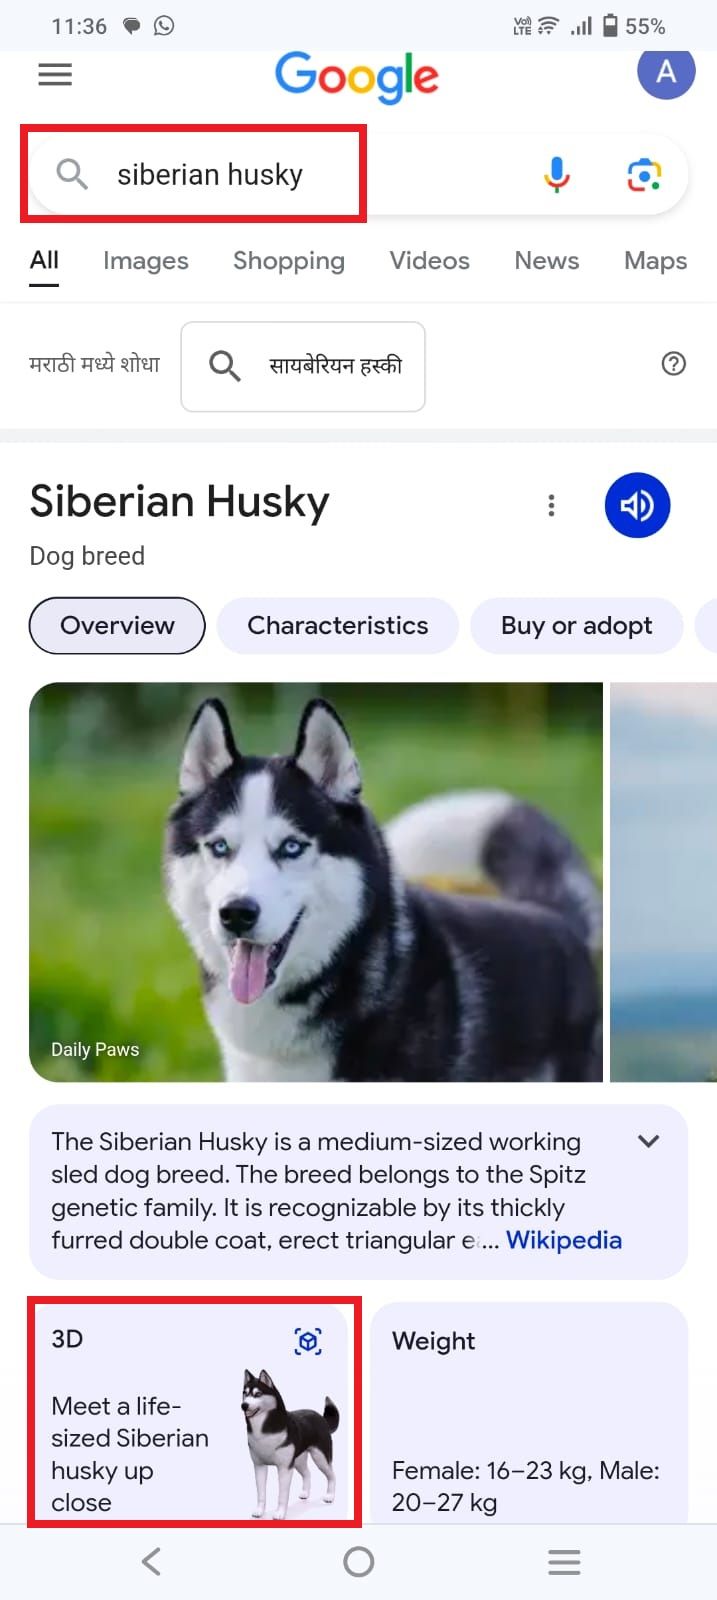 Screenshot highlighting the section 'Meet a life-sized Siberian husky up close'